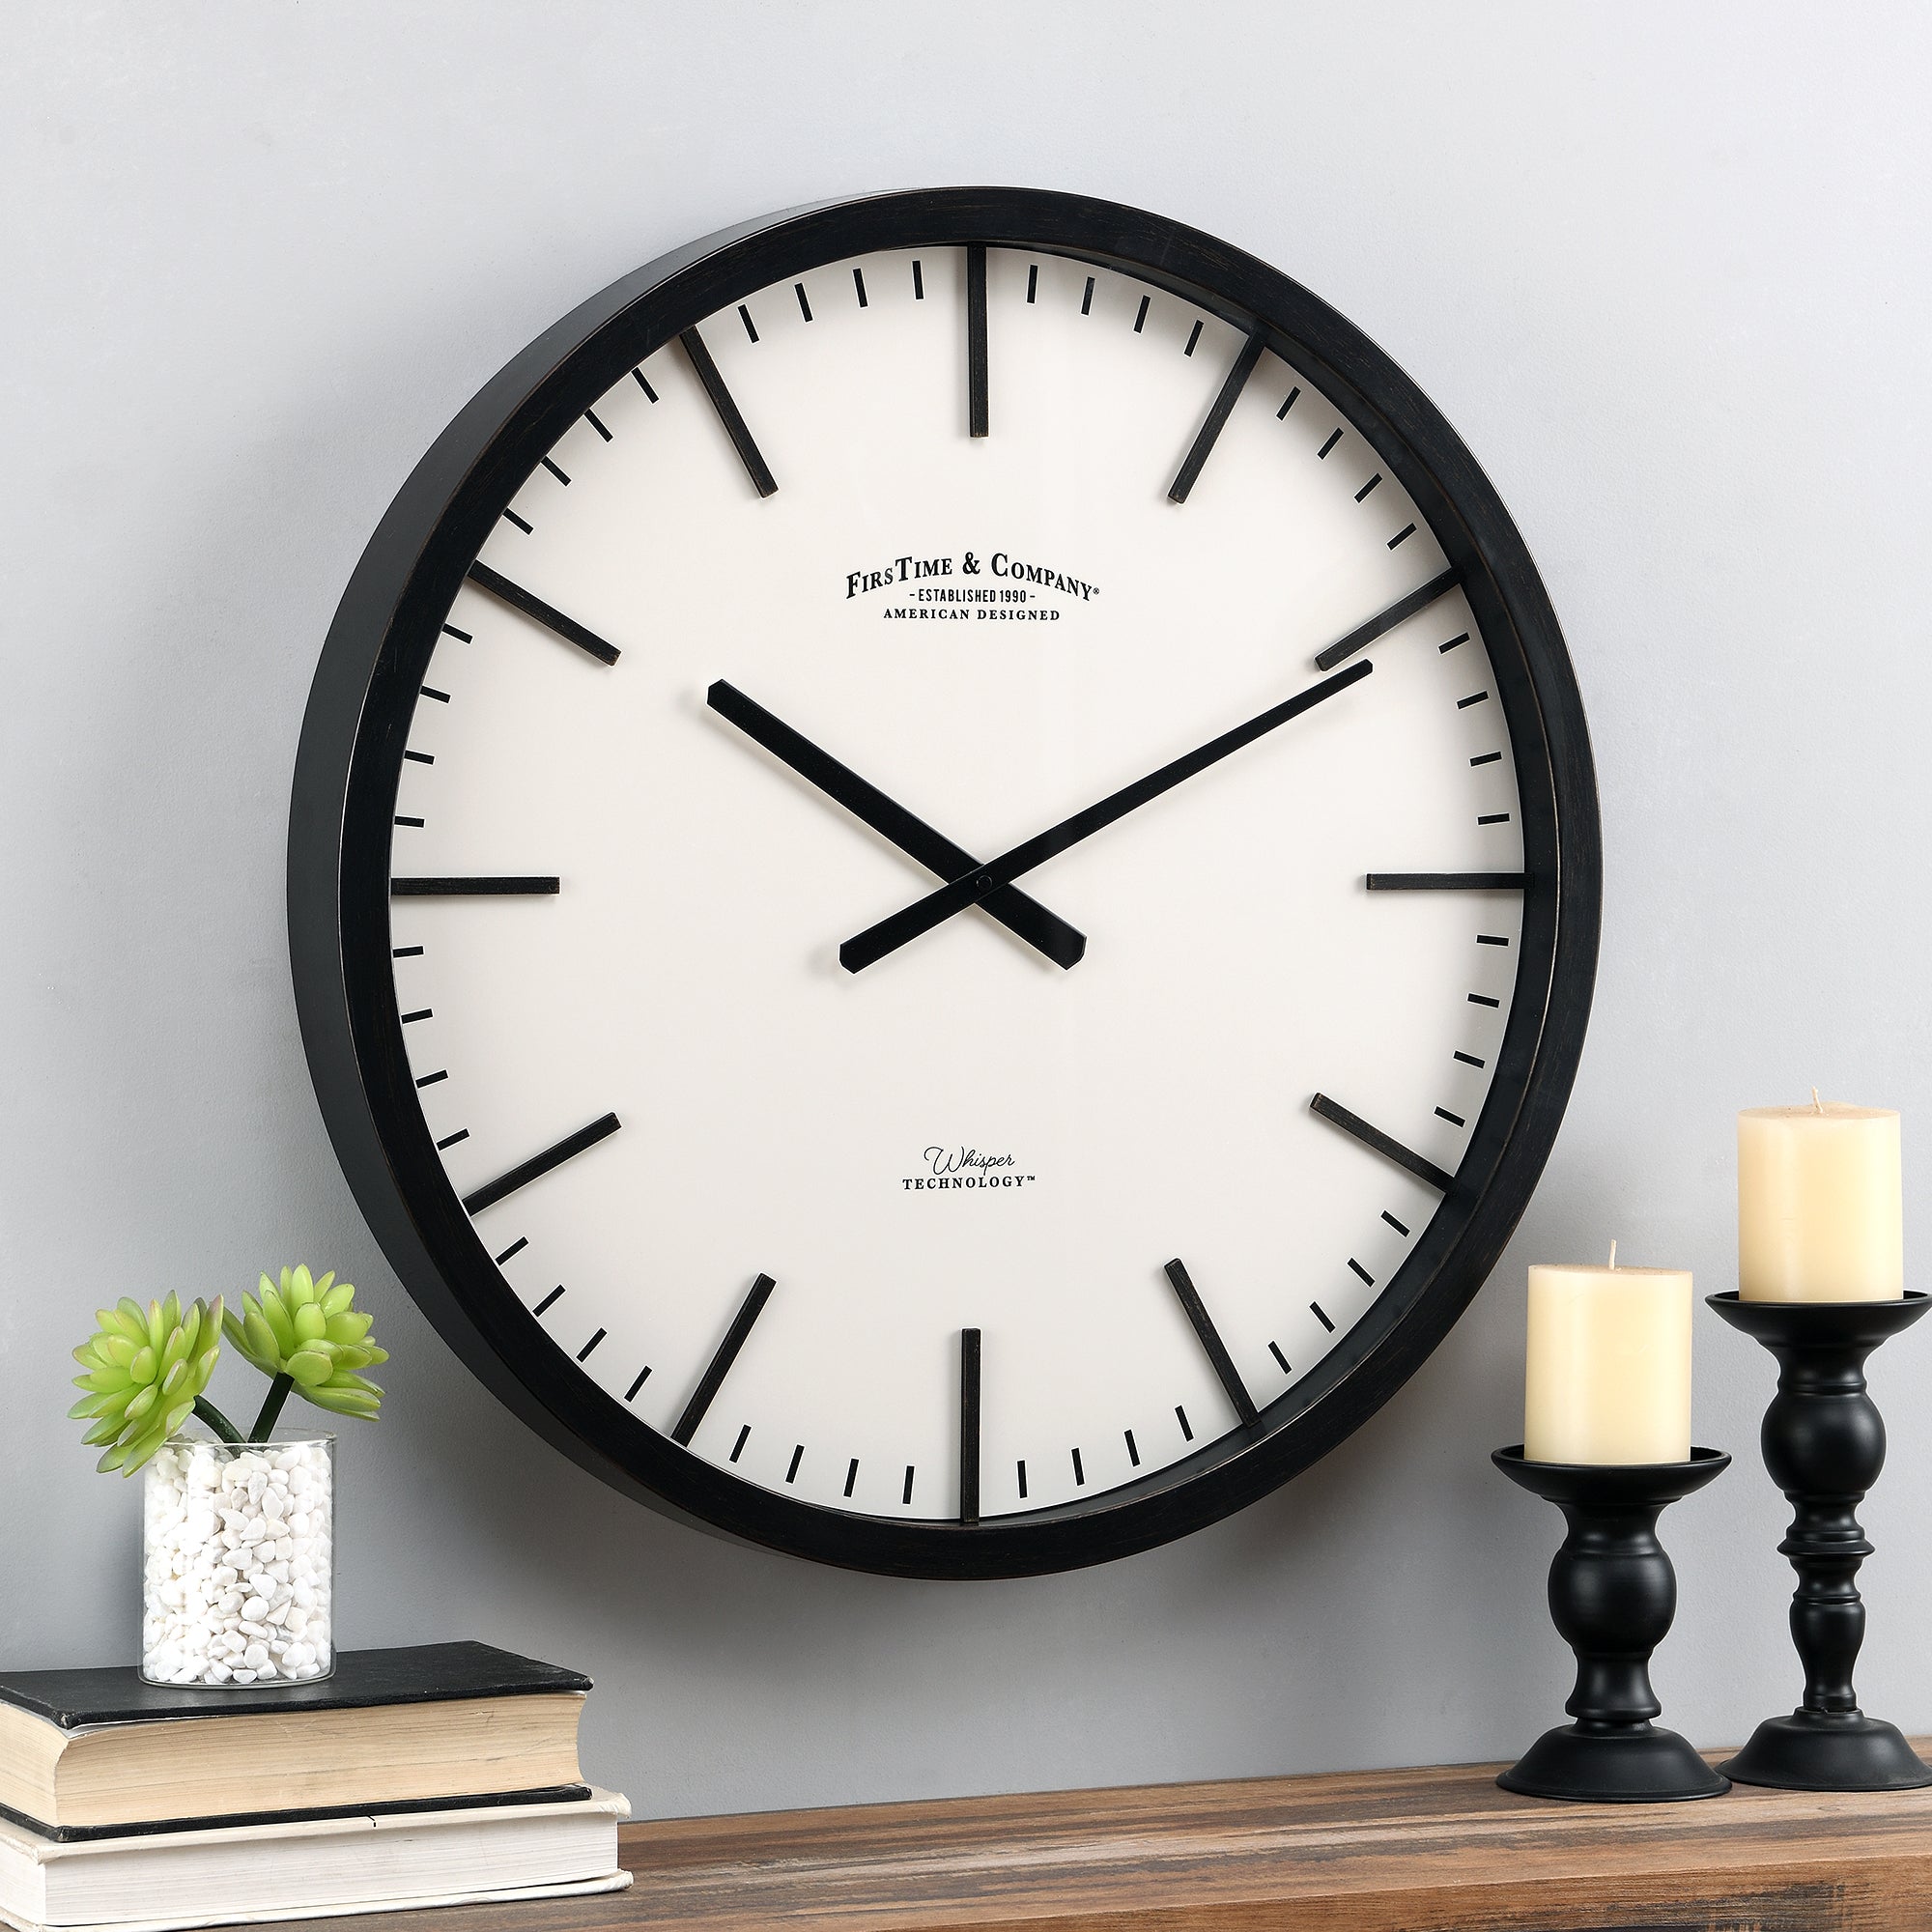 Wall Clocks - FirsTime & Co.